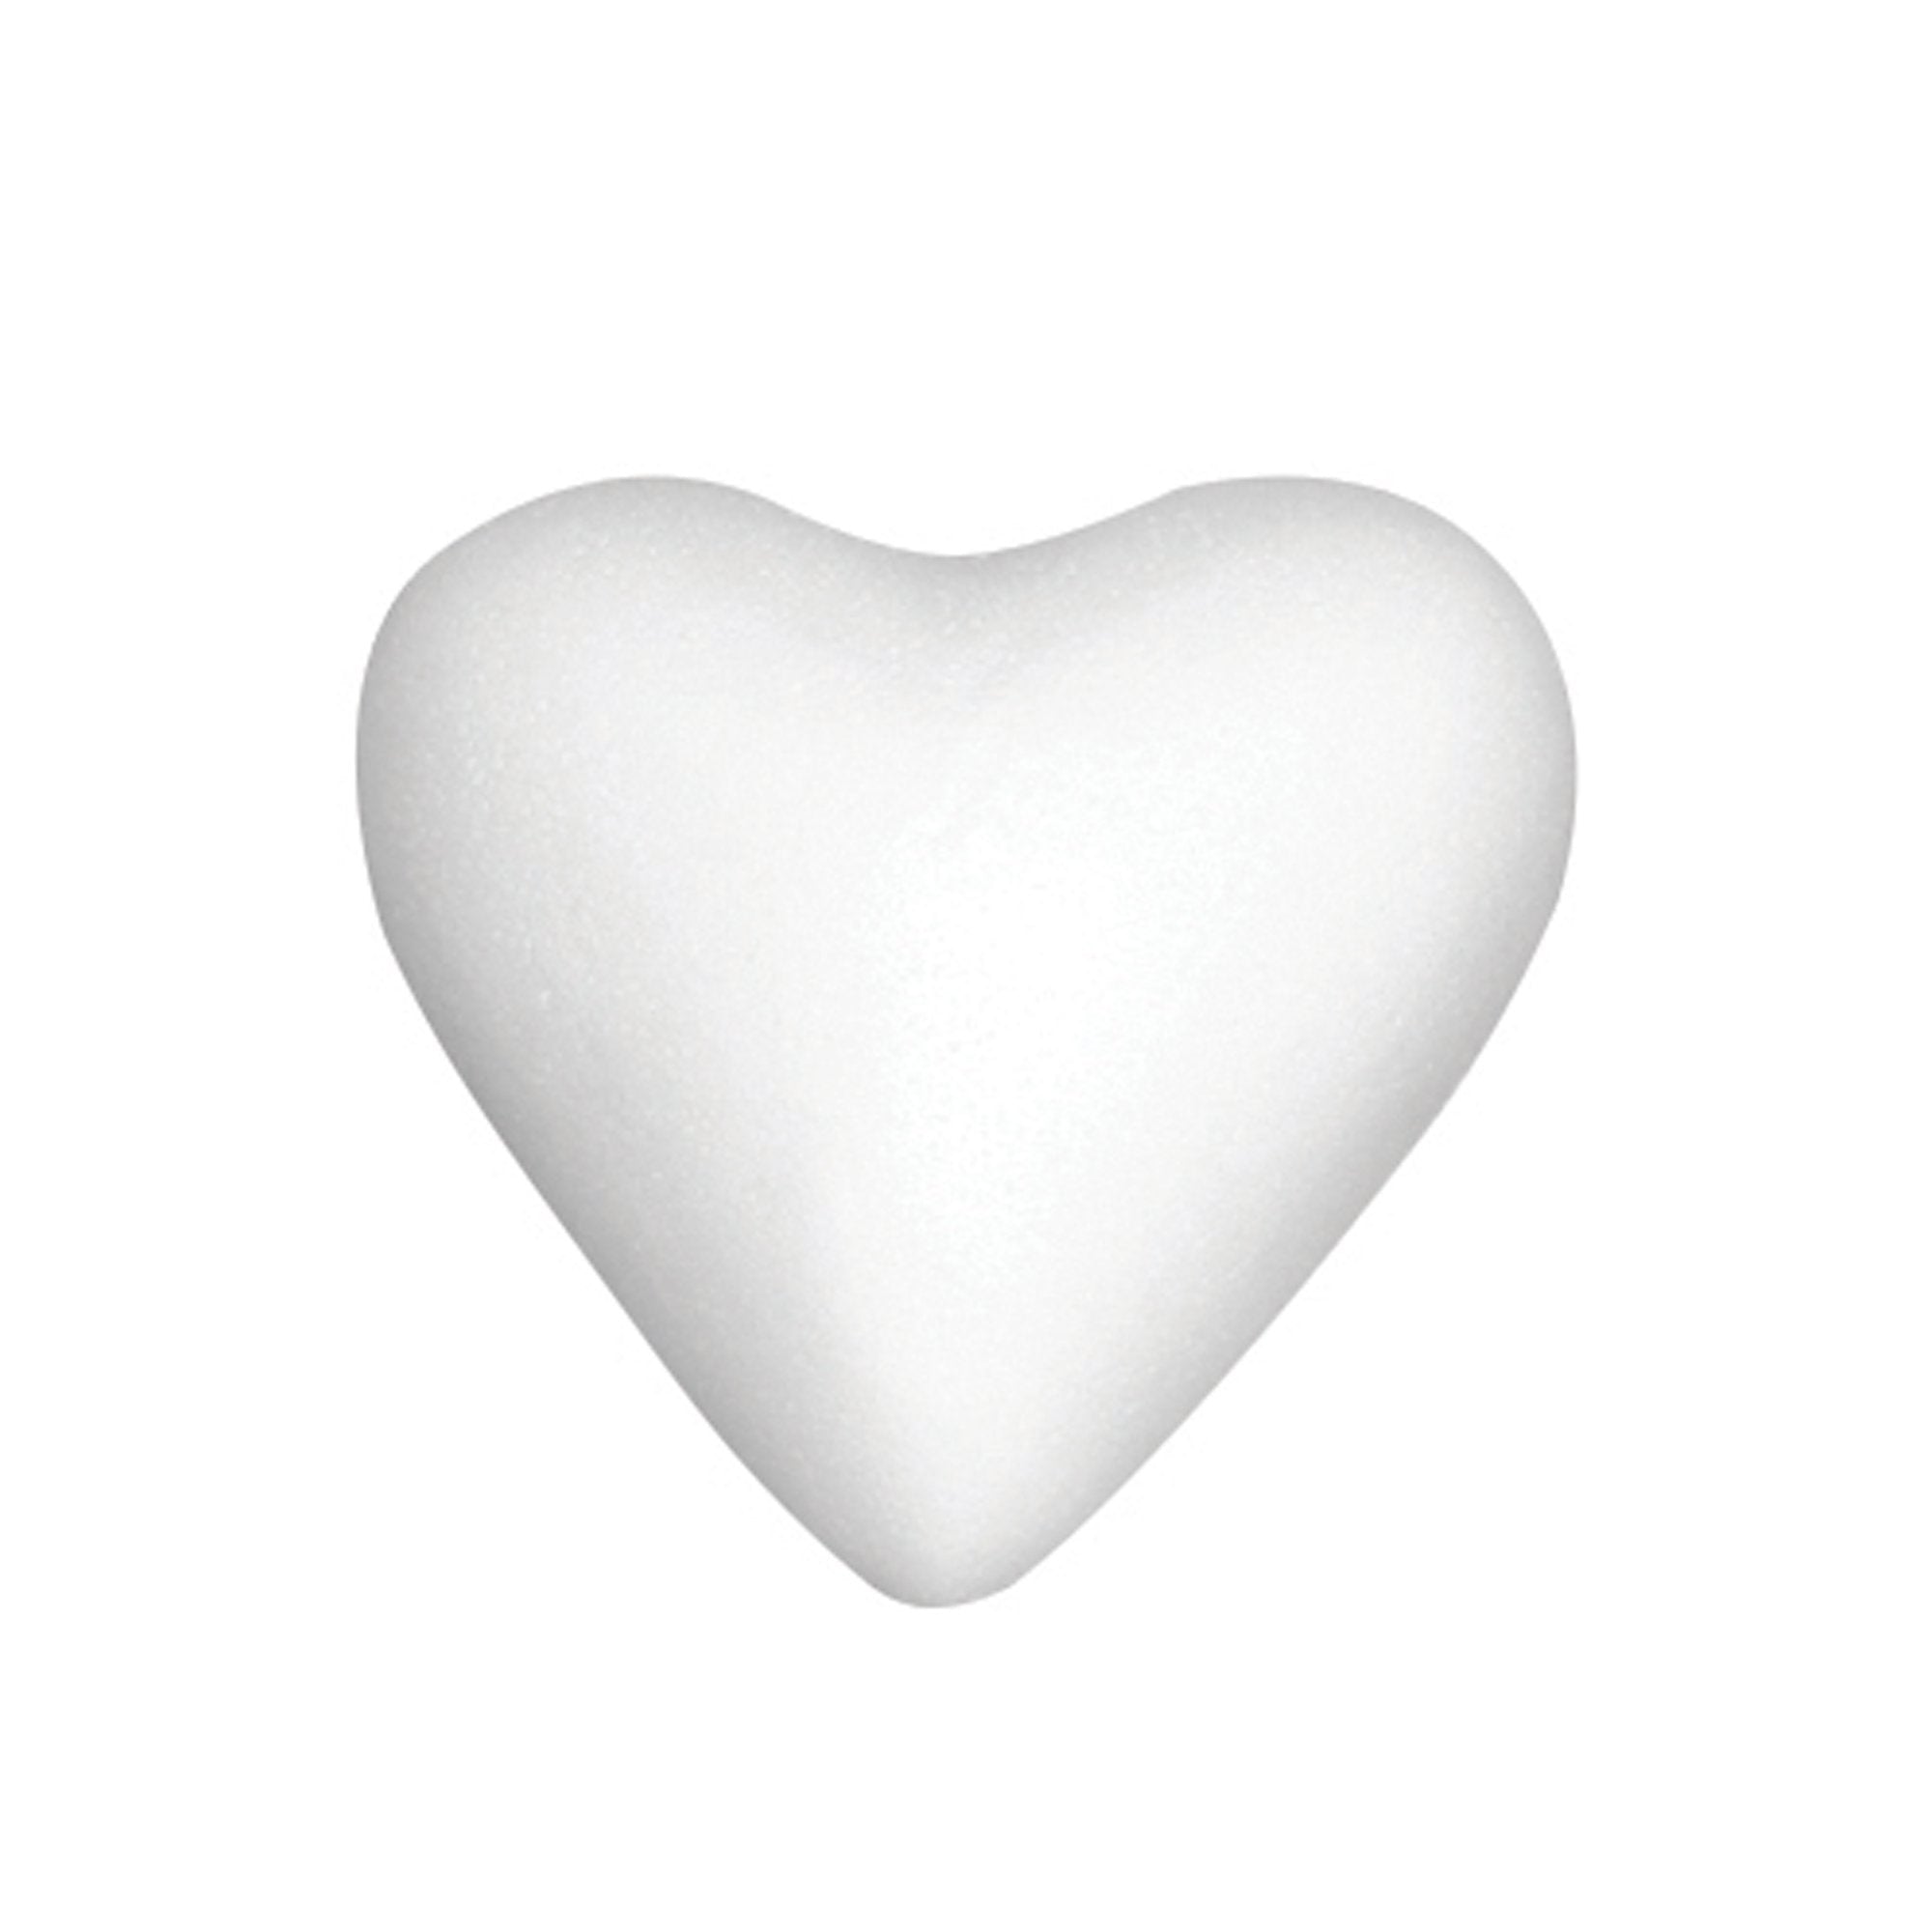 ri-plast-cuore-polistirolo-espanso-d110mm-ri-plast